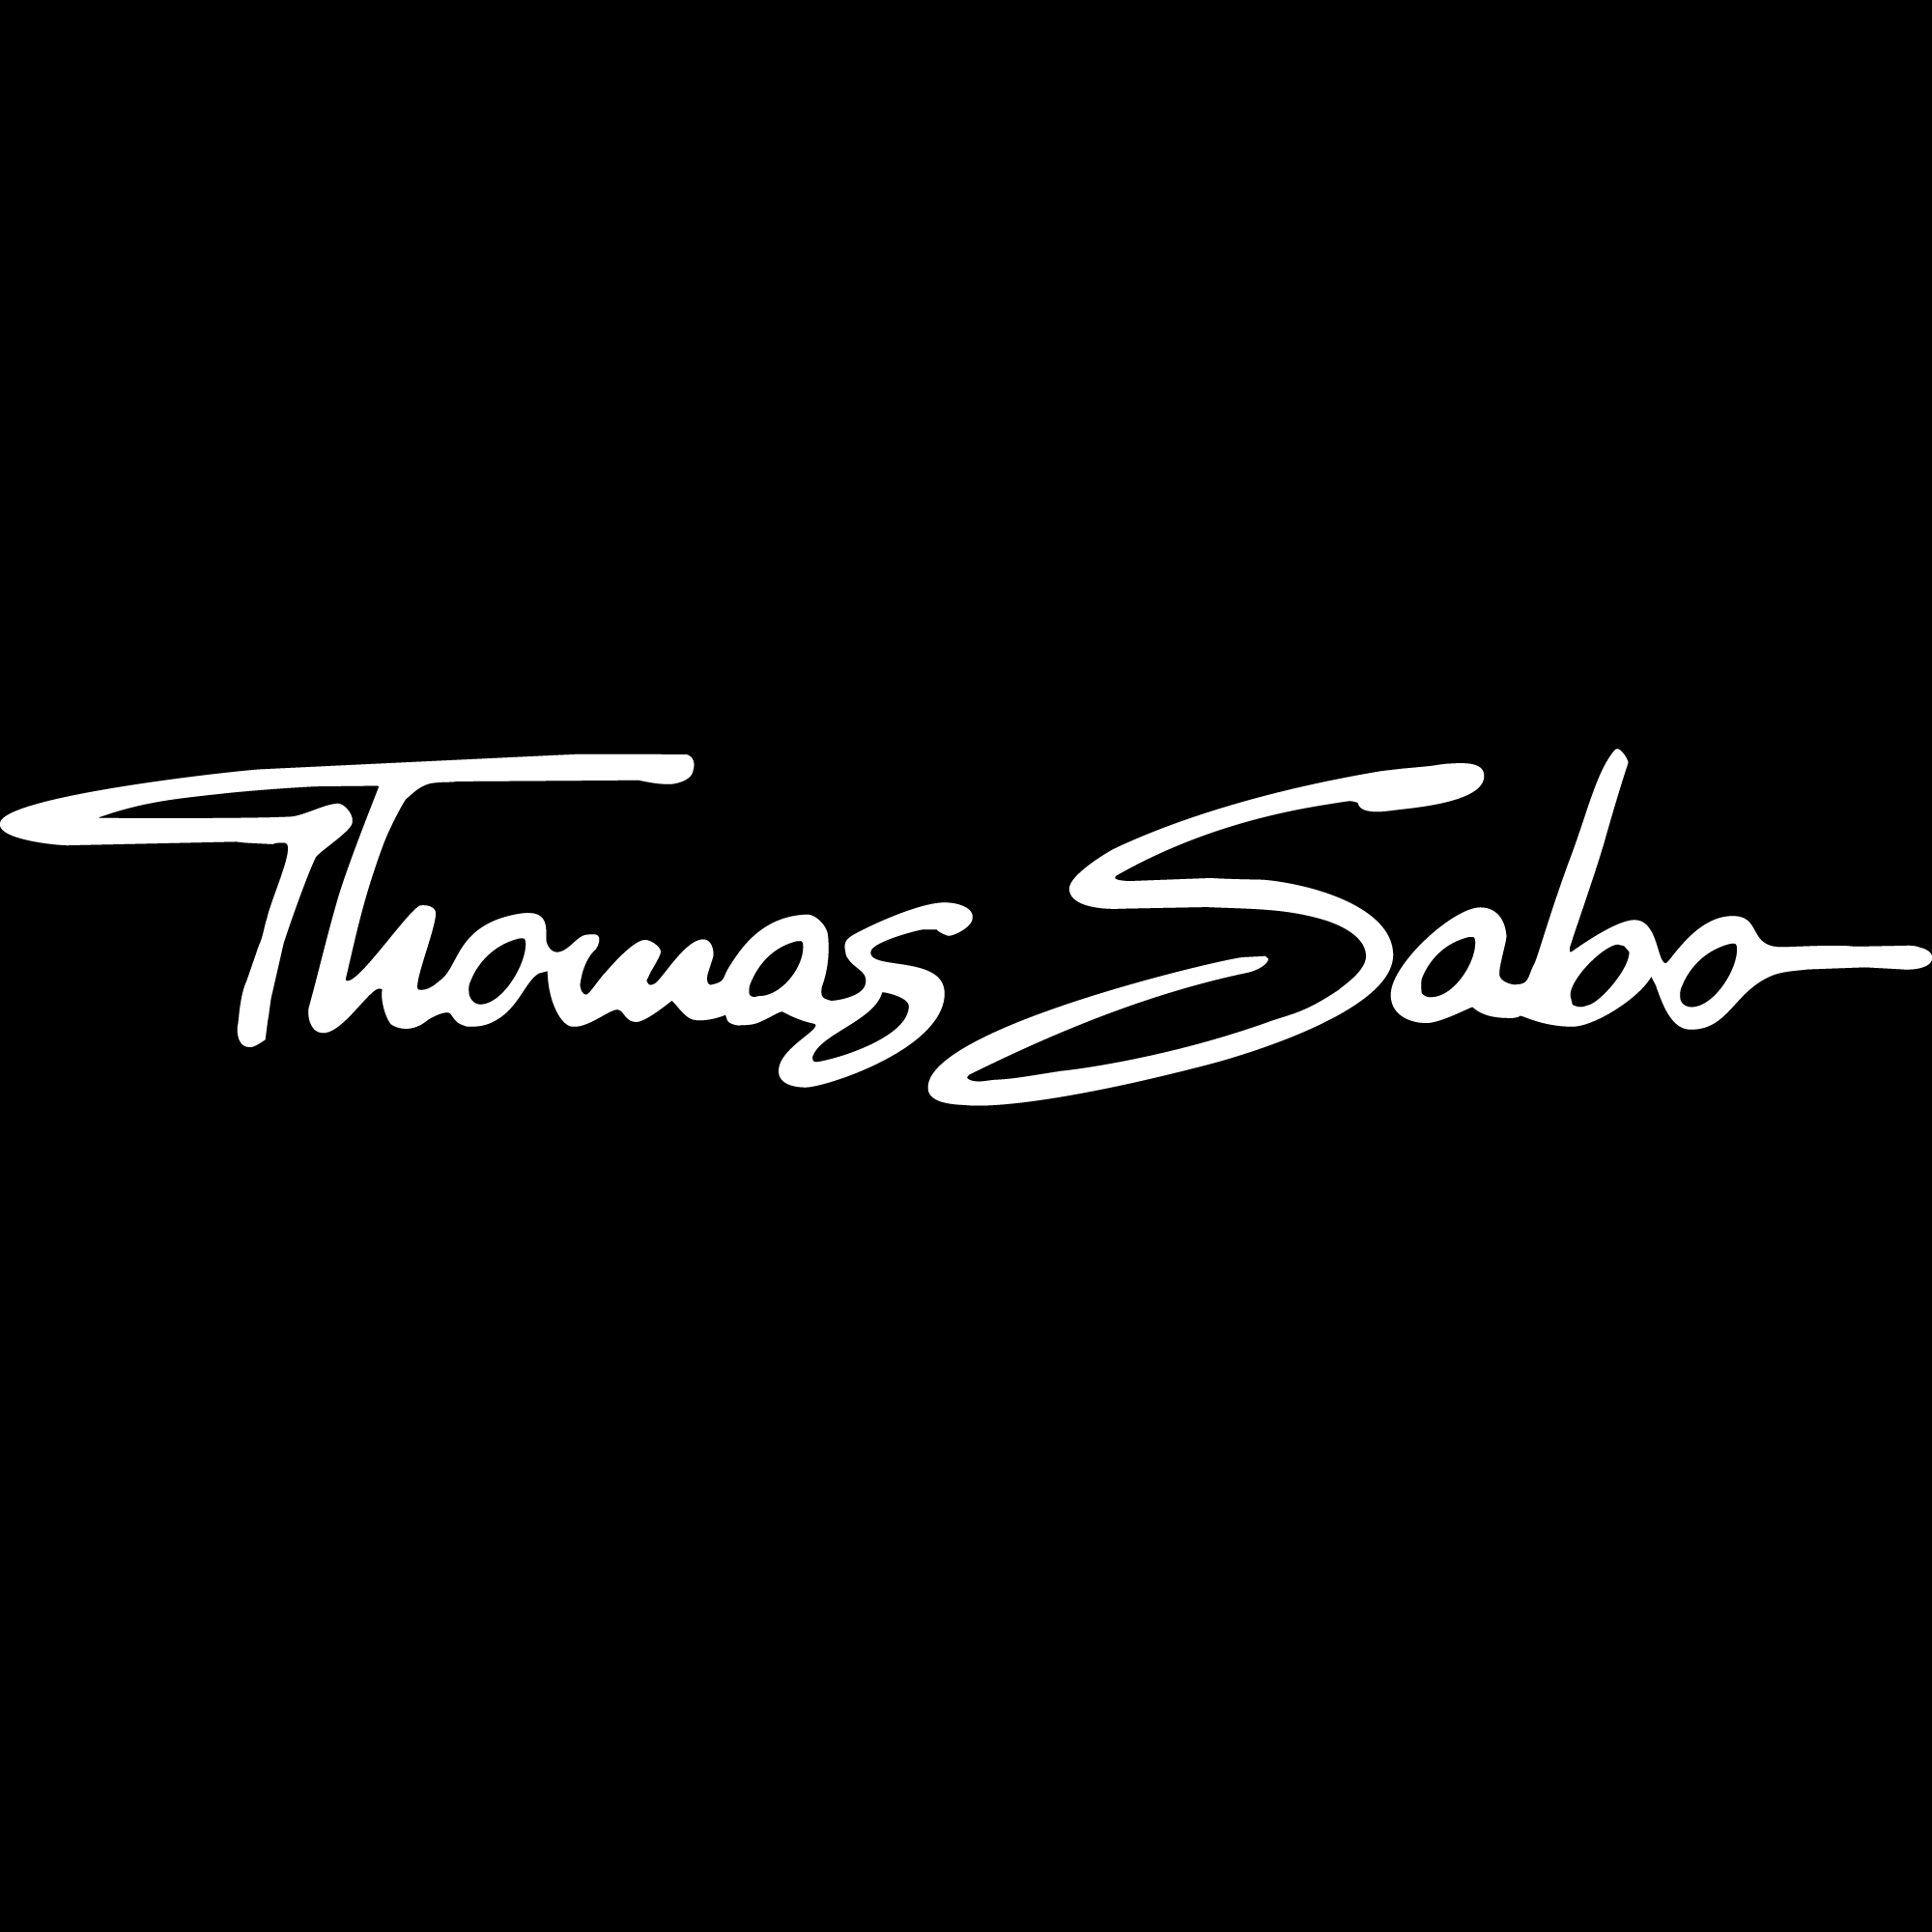 THOMAS SABO in Nürnberg - Logo